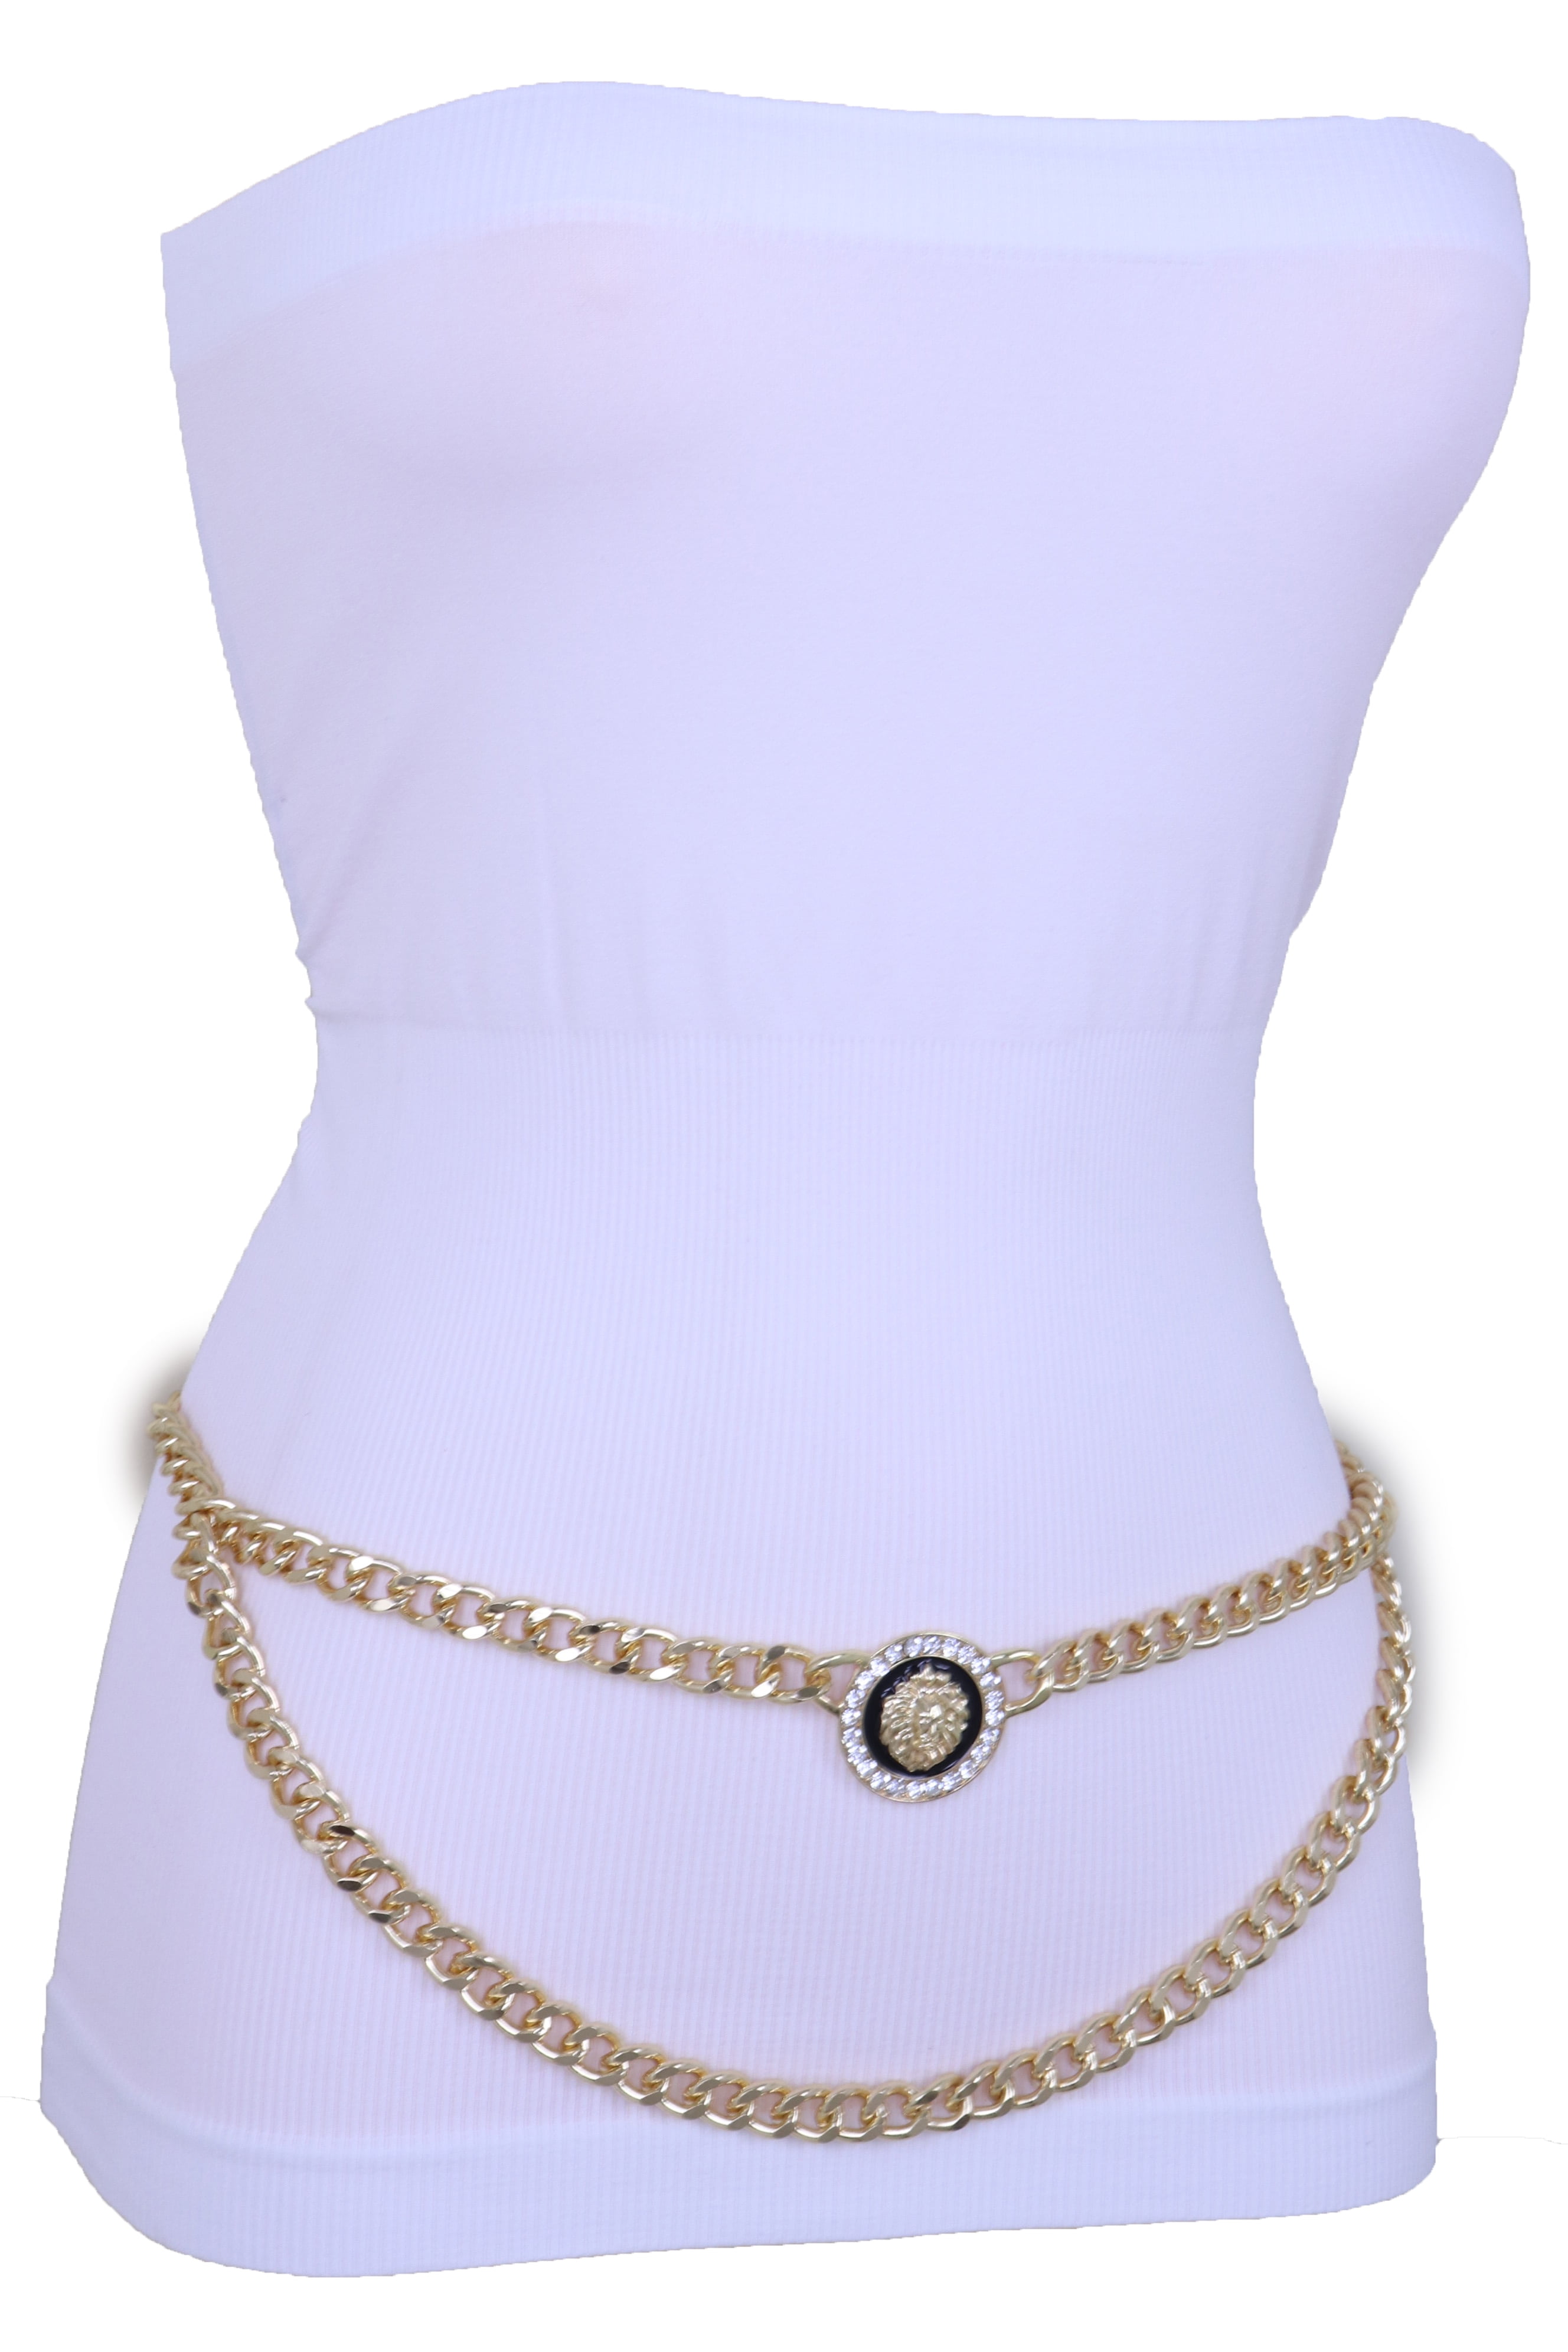 Chic Women Gold Metal Chain Link Wave Waist Hip Belt Lion Charm Coin Size M L XL 